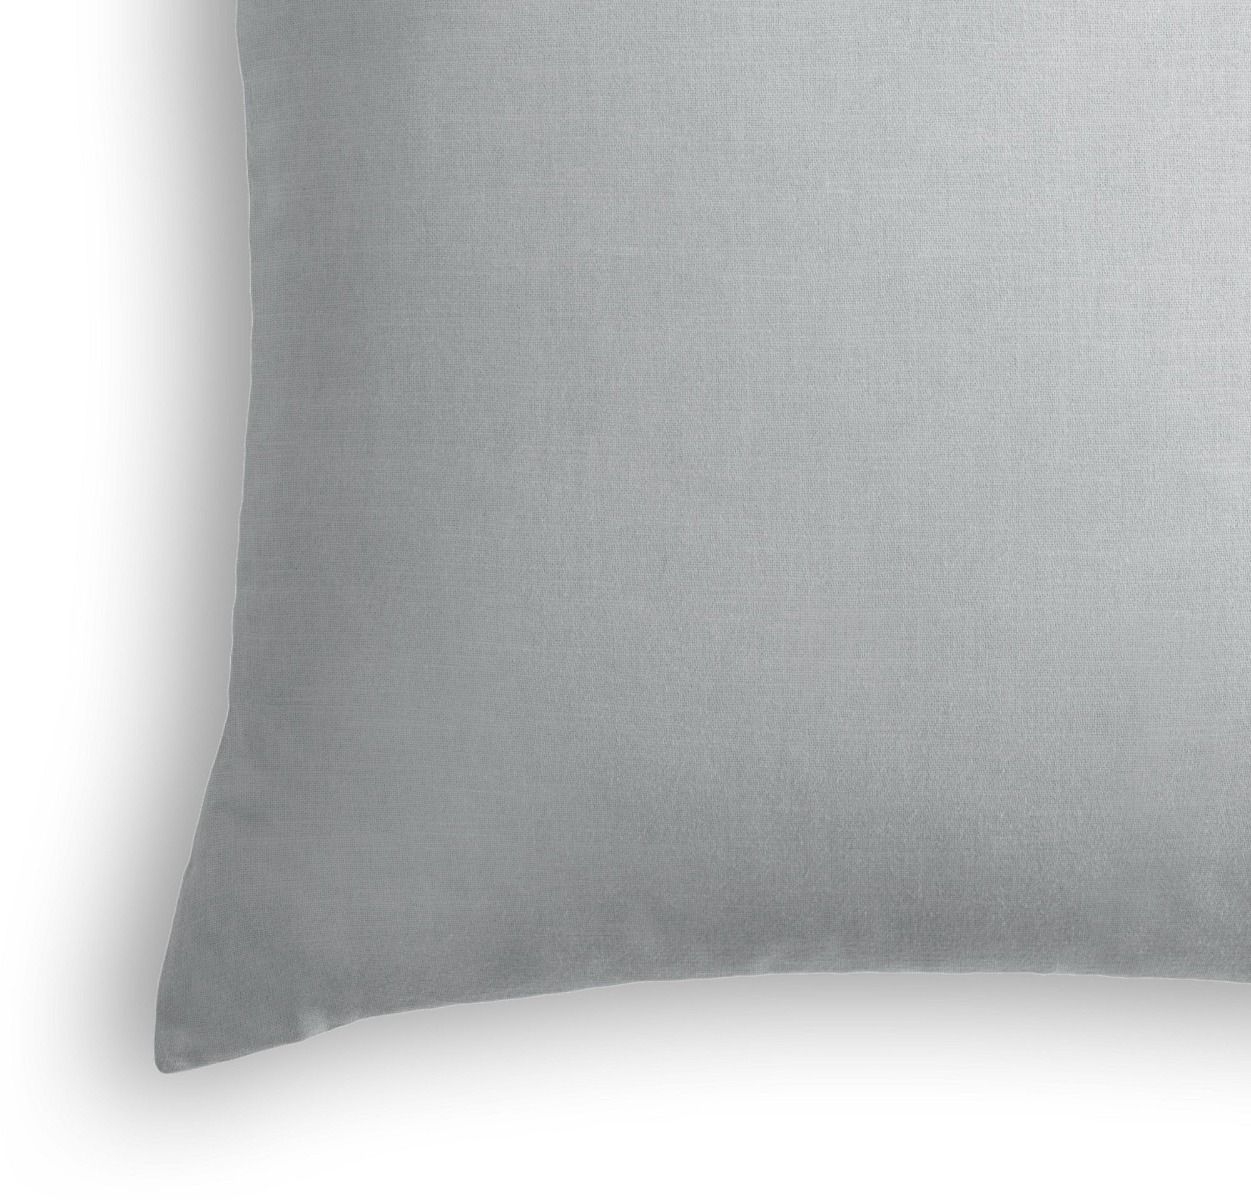 Classic Linen Pillow, Classic Gray, 20" x 20" - Image 1